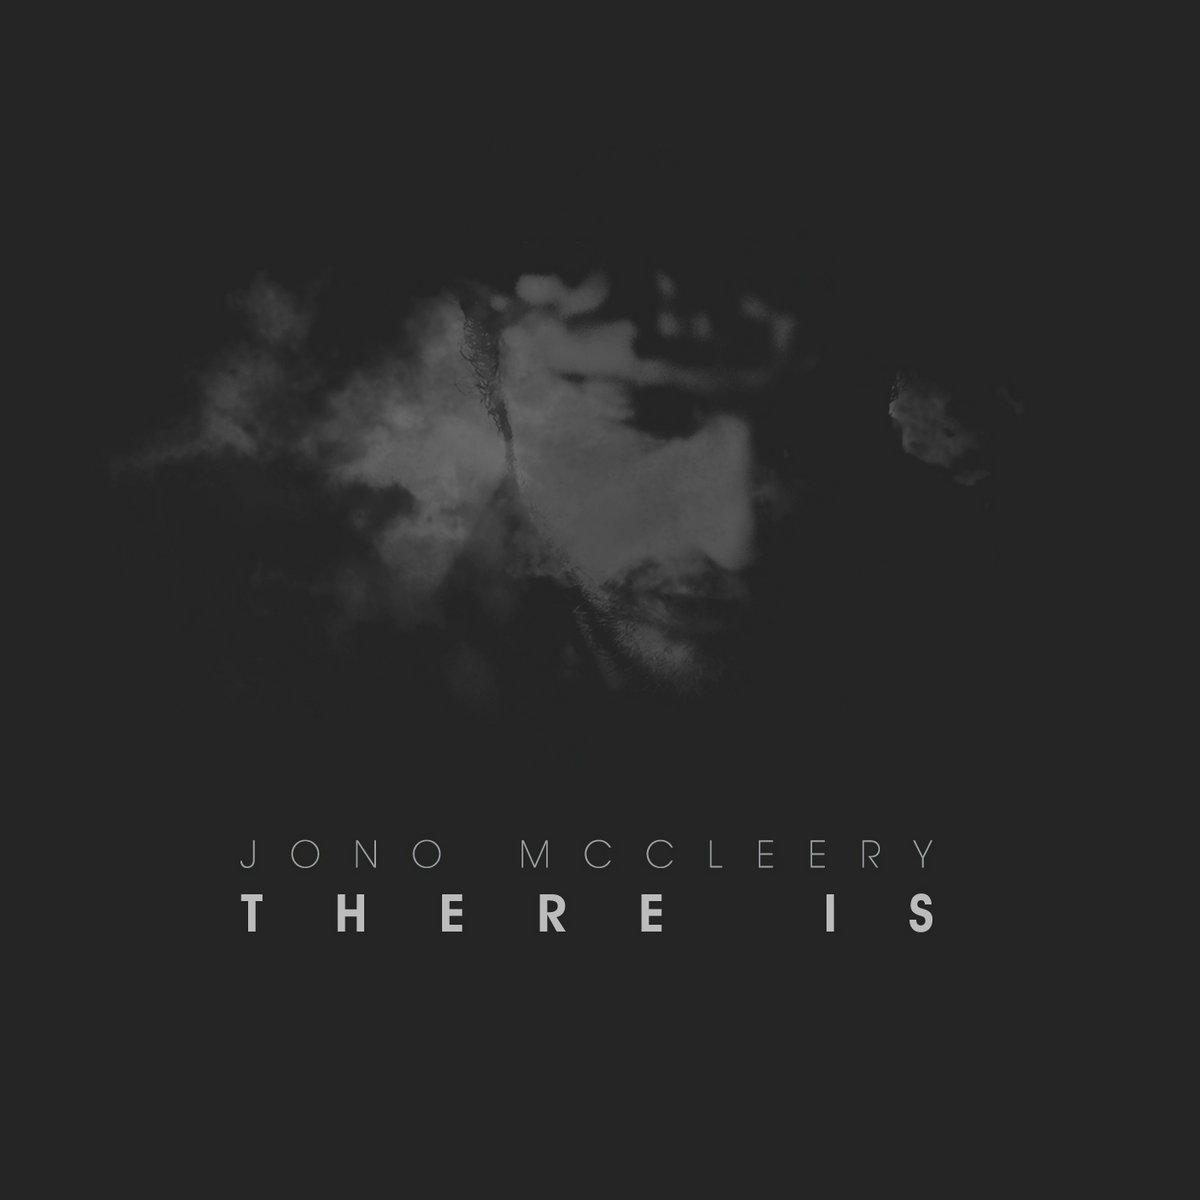 Jono McCleery — She moves cover artwork